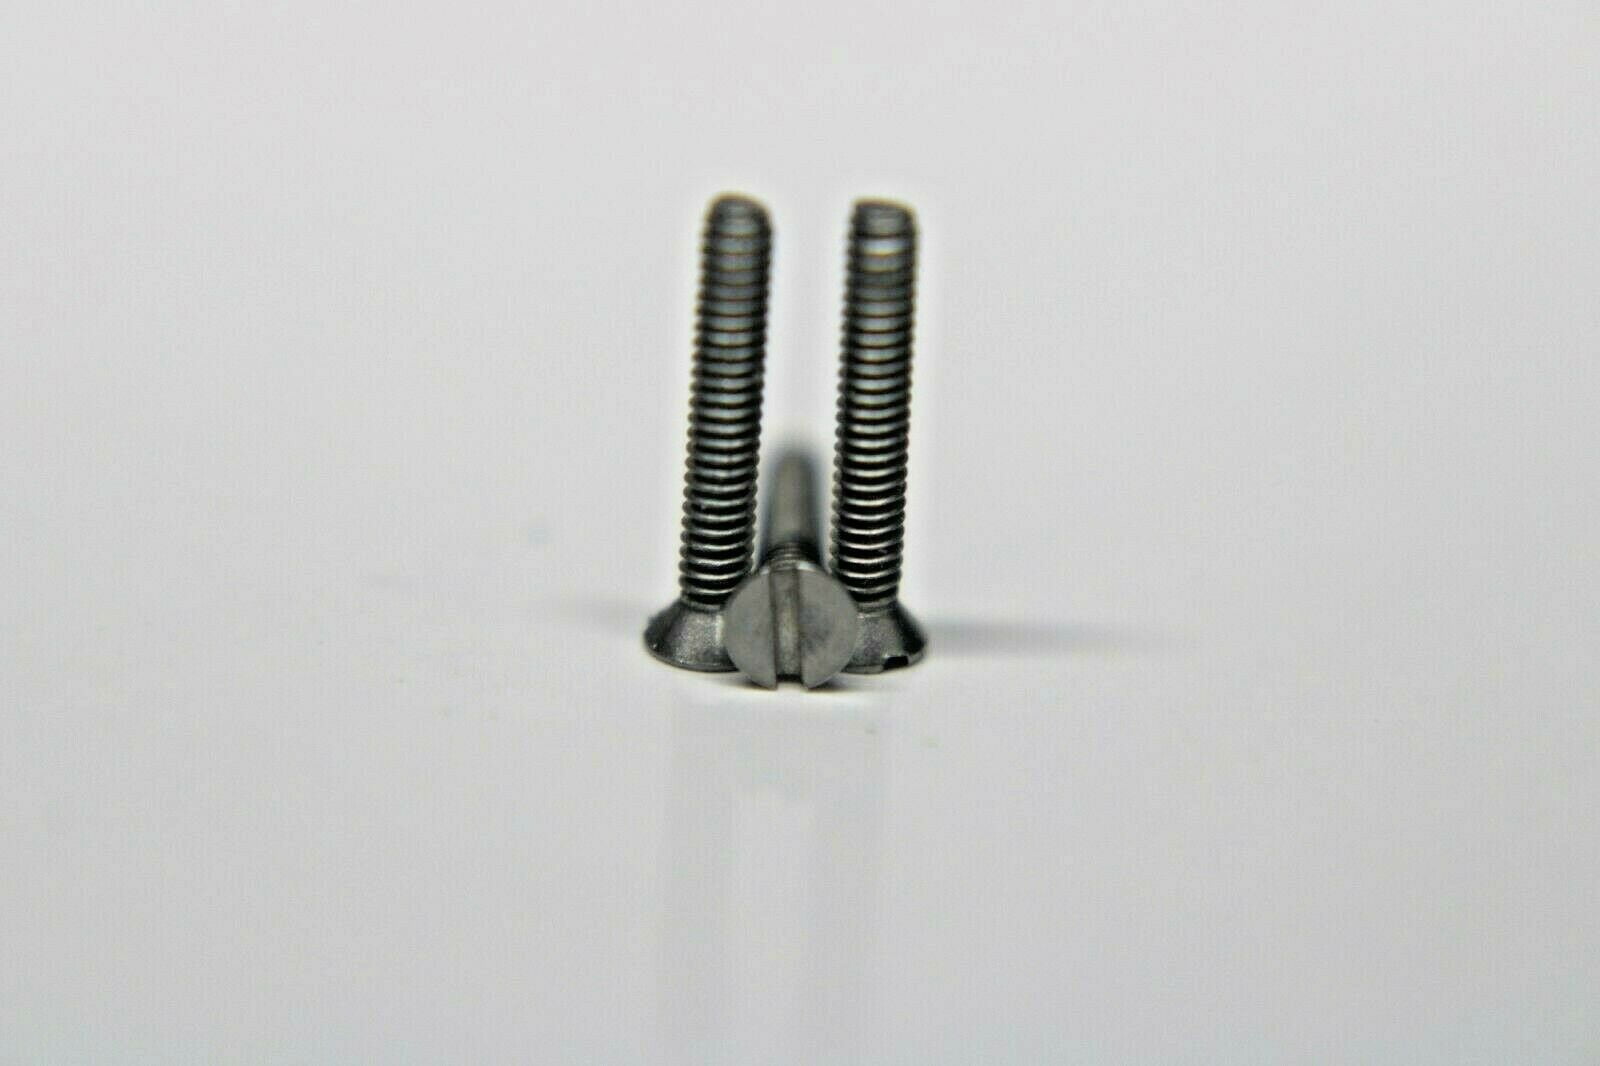 0-80 Slotted flat head Machine screws Stainless steel 18-8 (304) (3/8